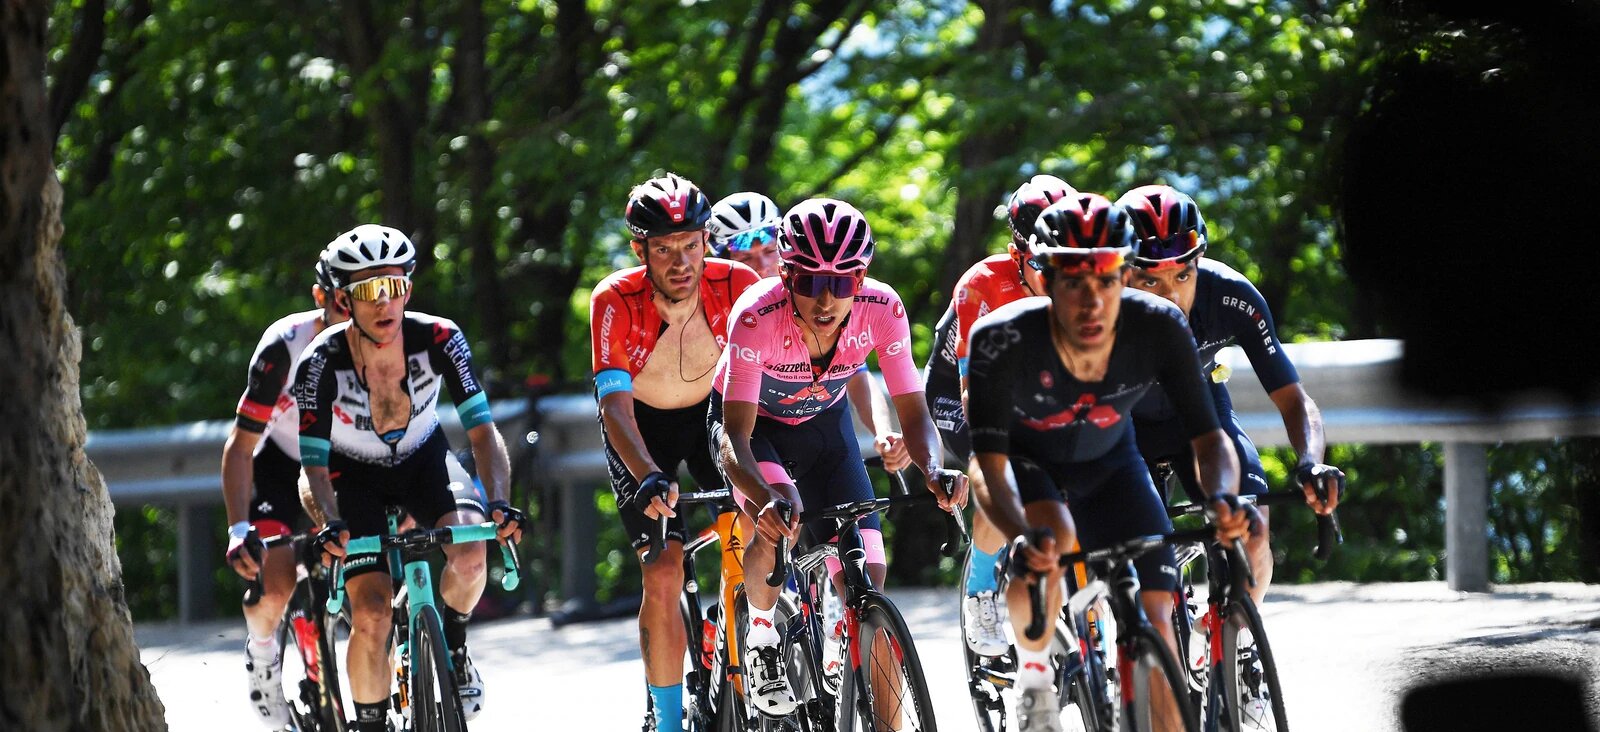 Phinney's homemade custom Giros at Tour de Suisse - BikeRadar